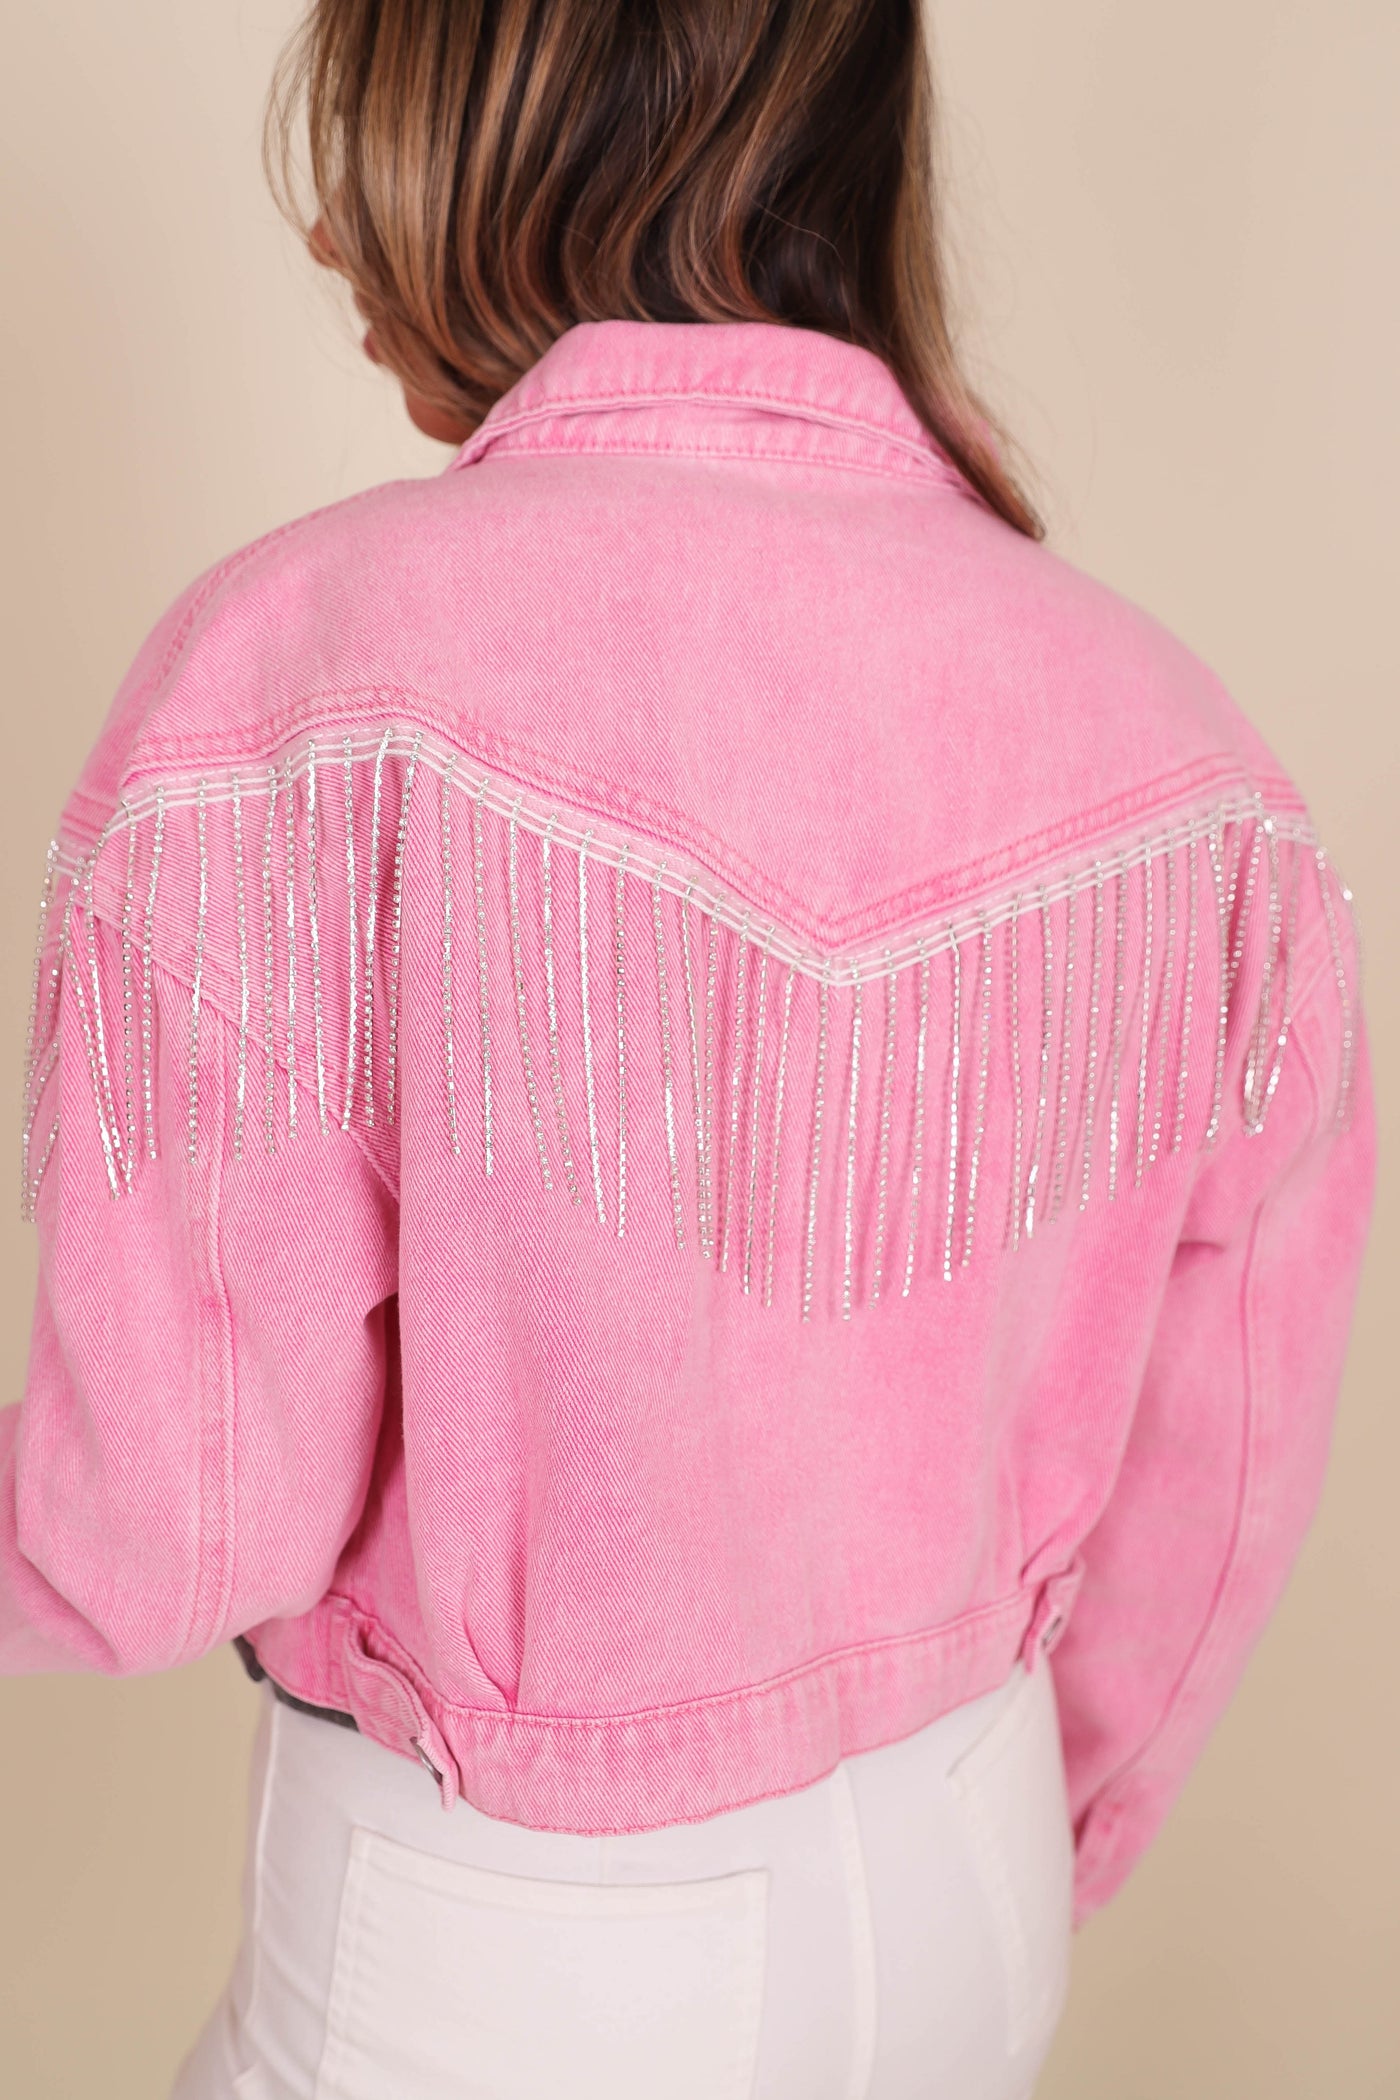 Juliana's Boutique Pink Denim Rhinestone Jacket- Pink Rhinestone Fringe Jacket- Bling Pink Jacket Small